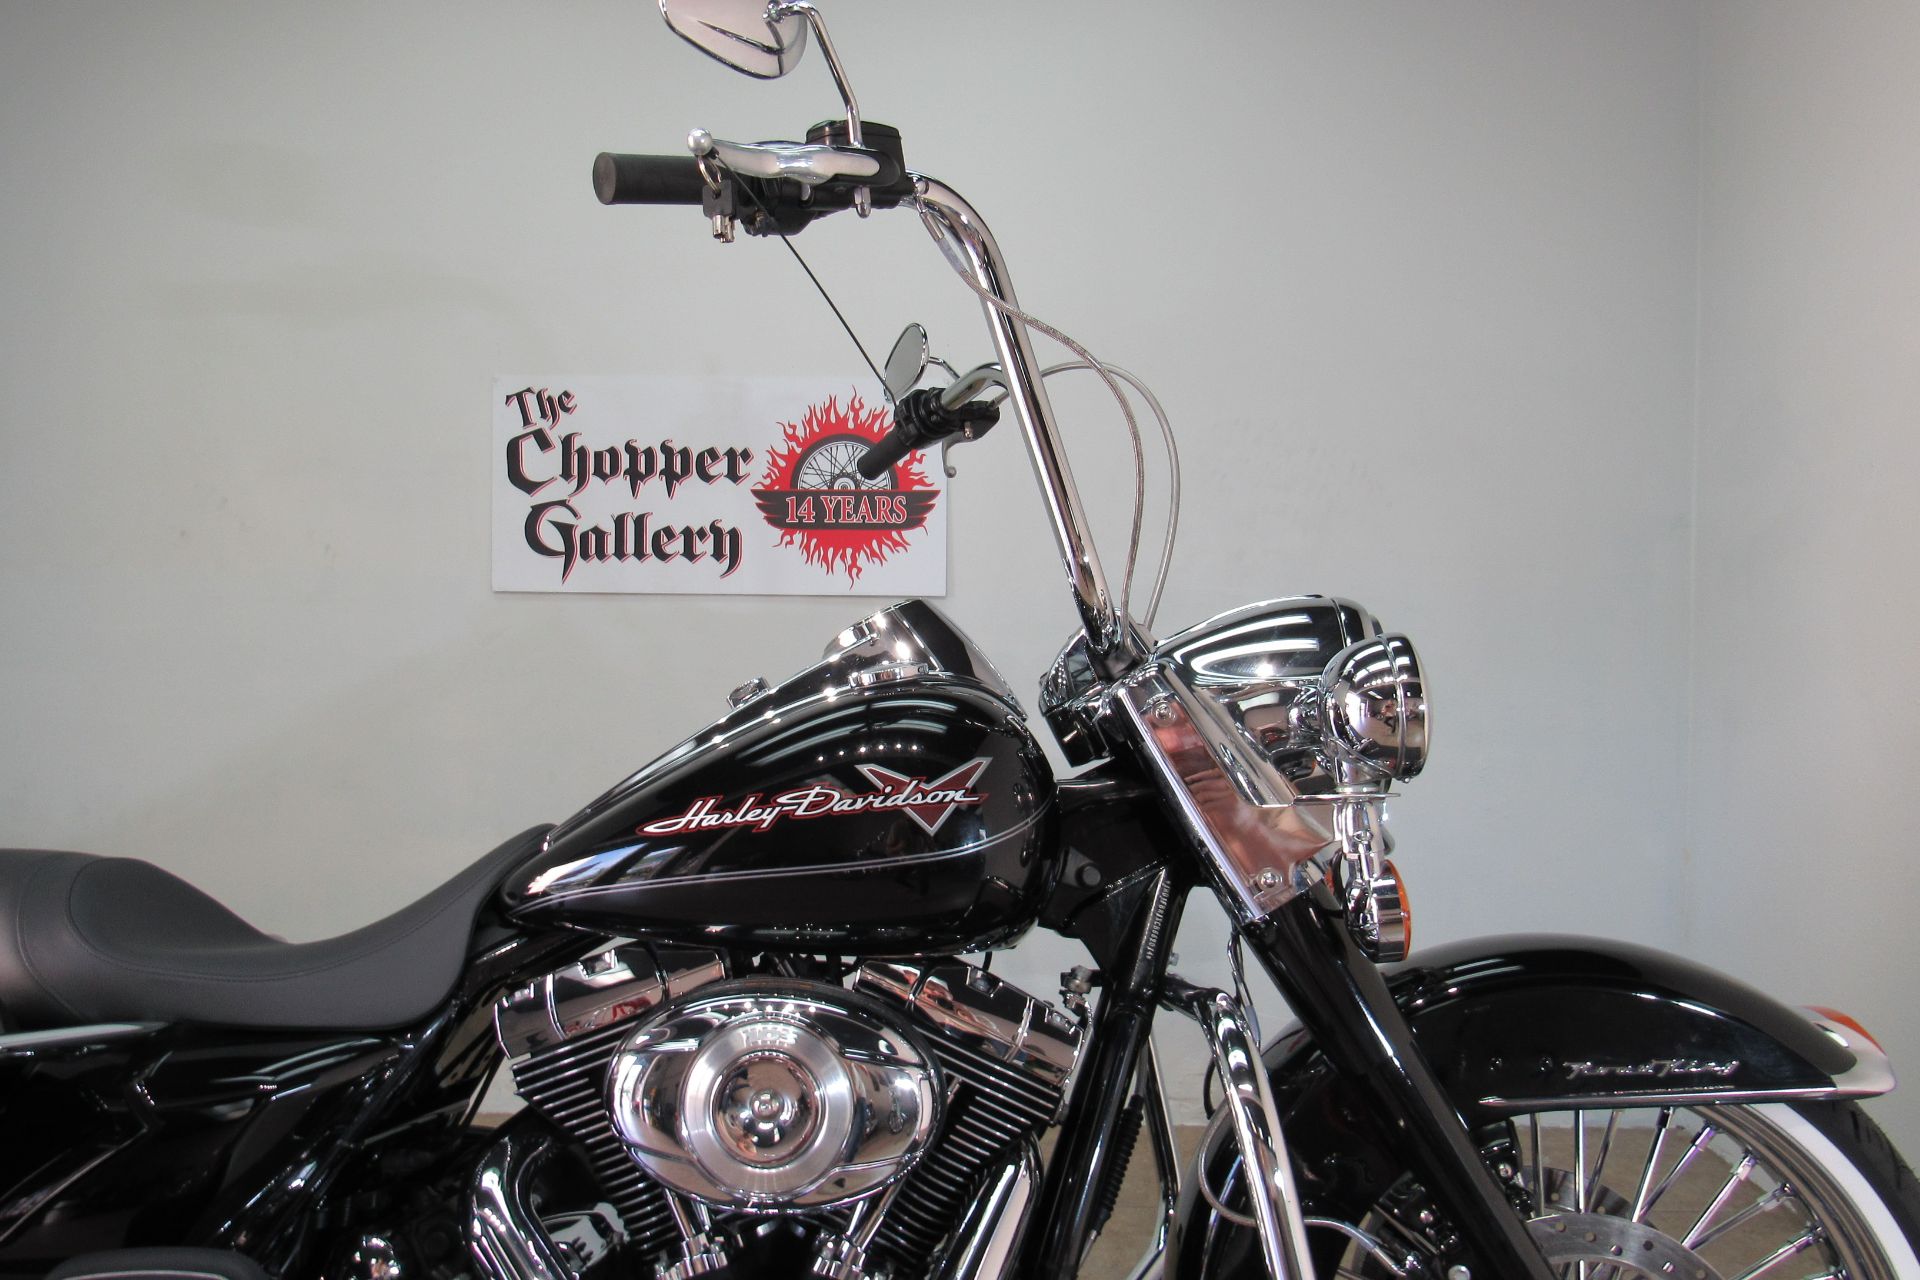 2012 Harley-Davidson Road King® in Temecula, California - Photo 9